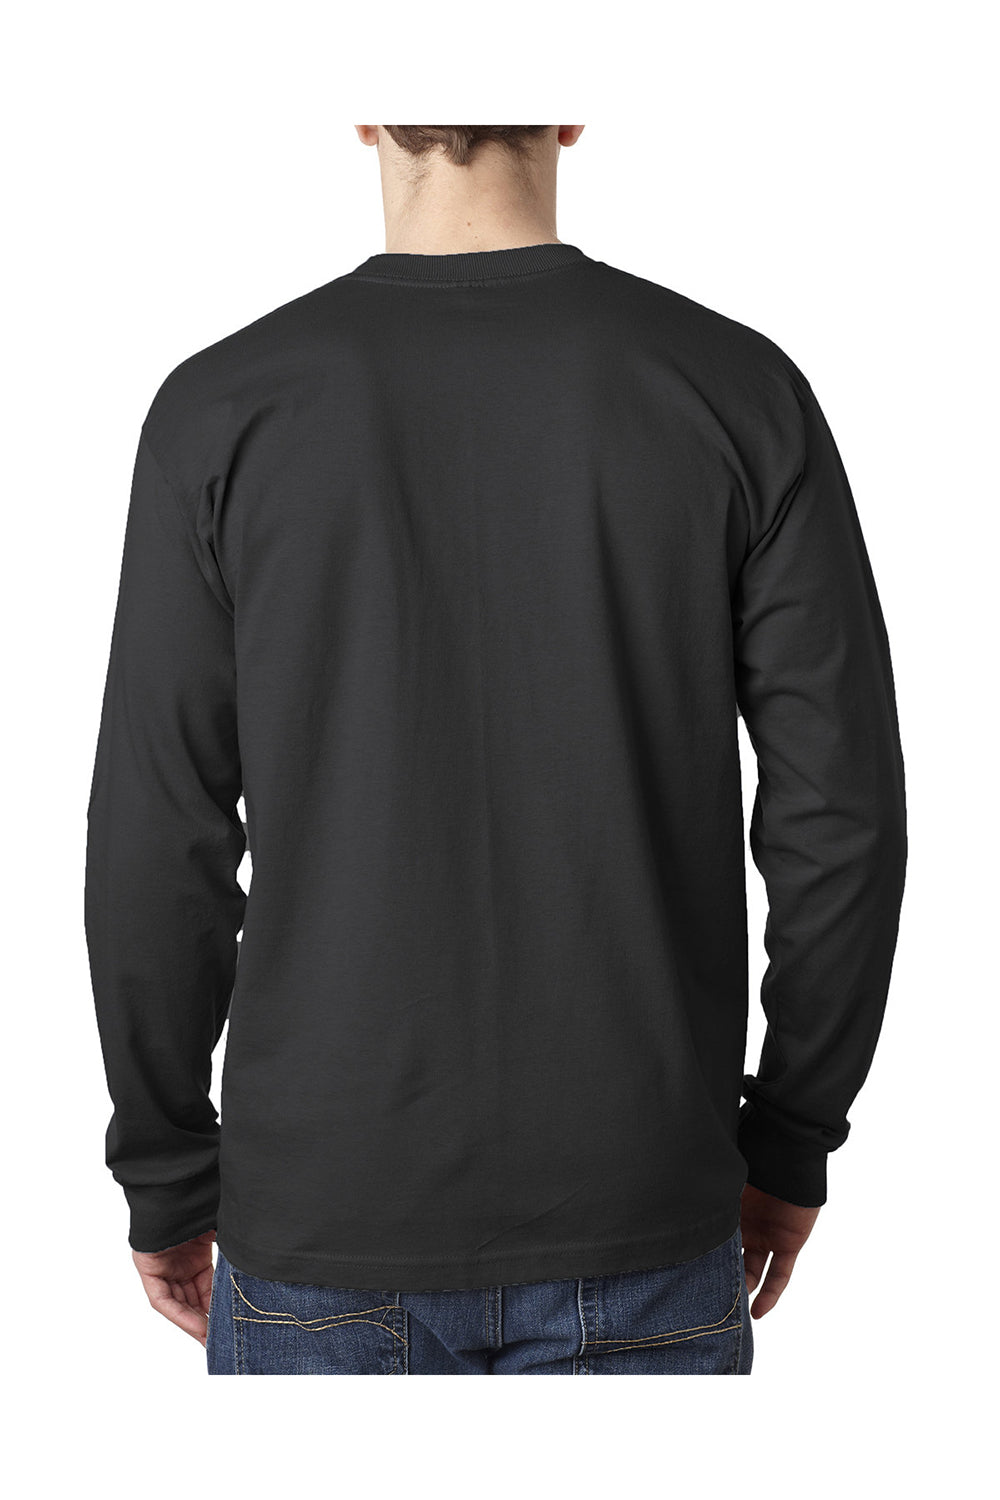 Bayside BA8100 Mens USA Made Long Sleeve Crewneck T-Shirt w/ Pocket Black Model Back